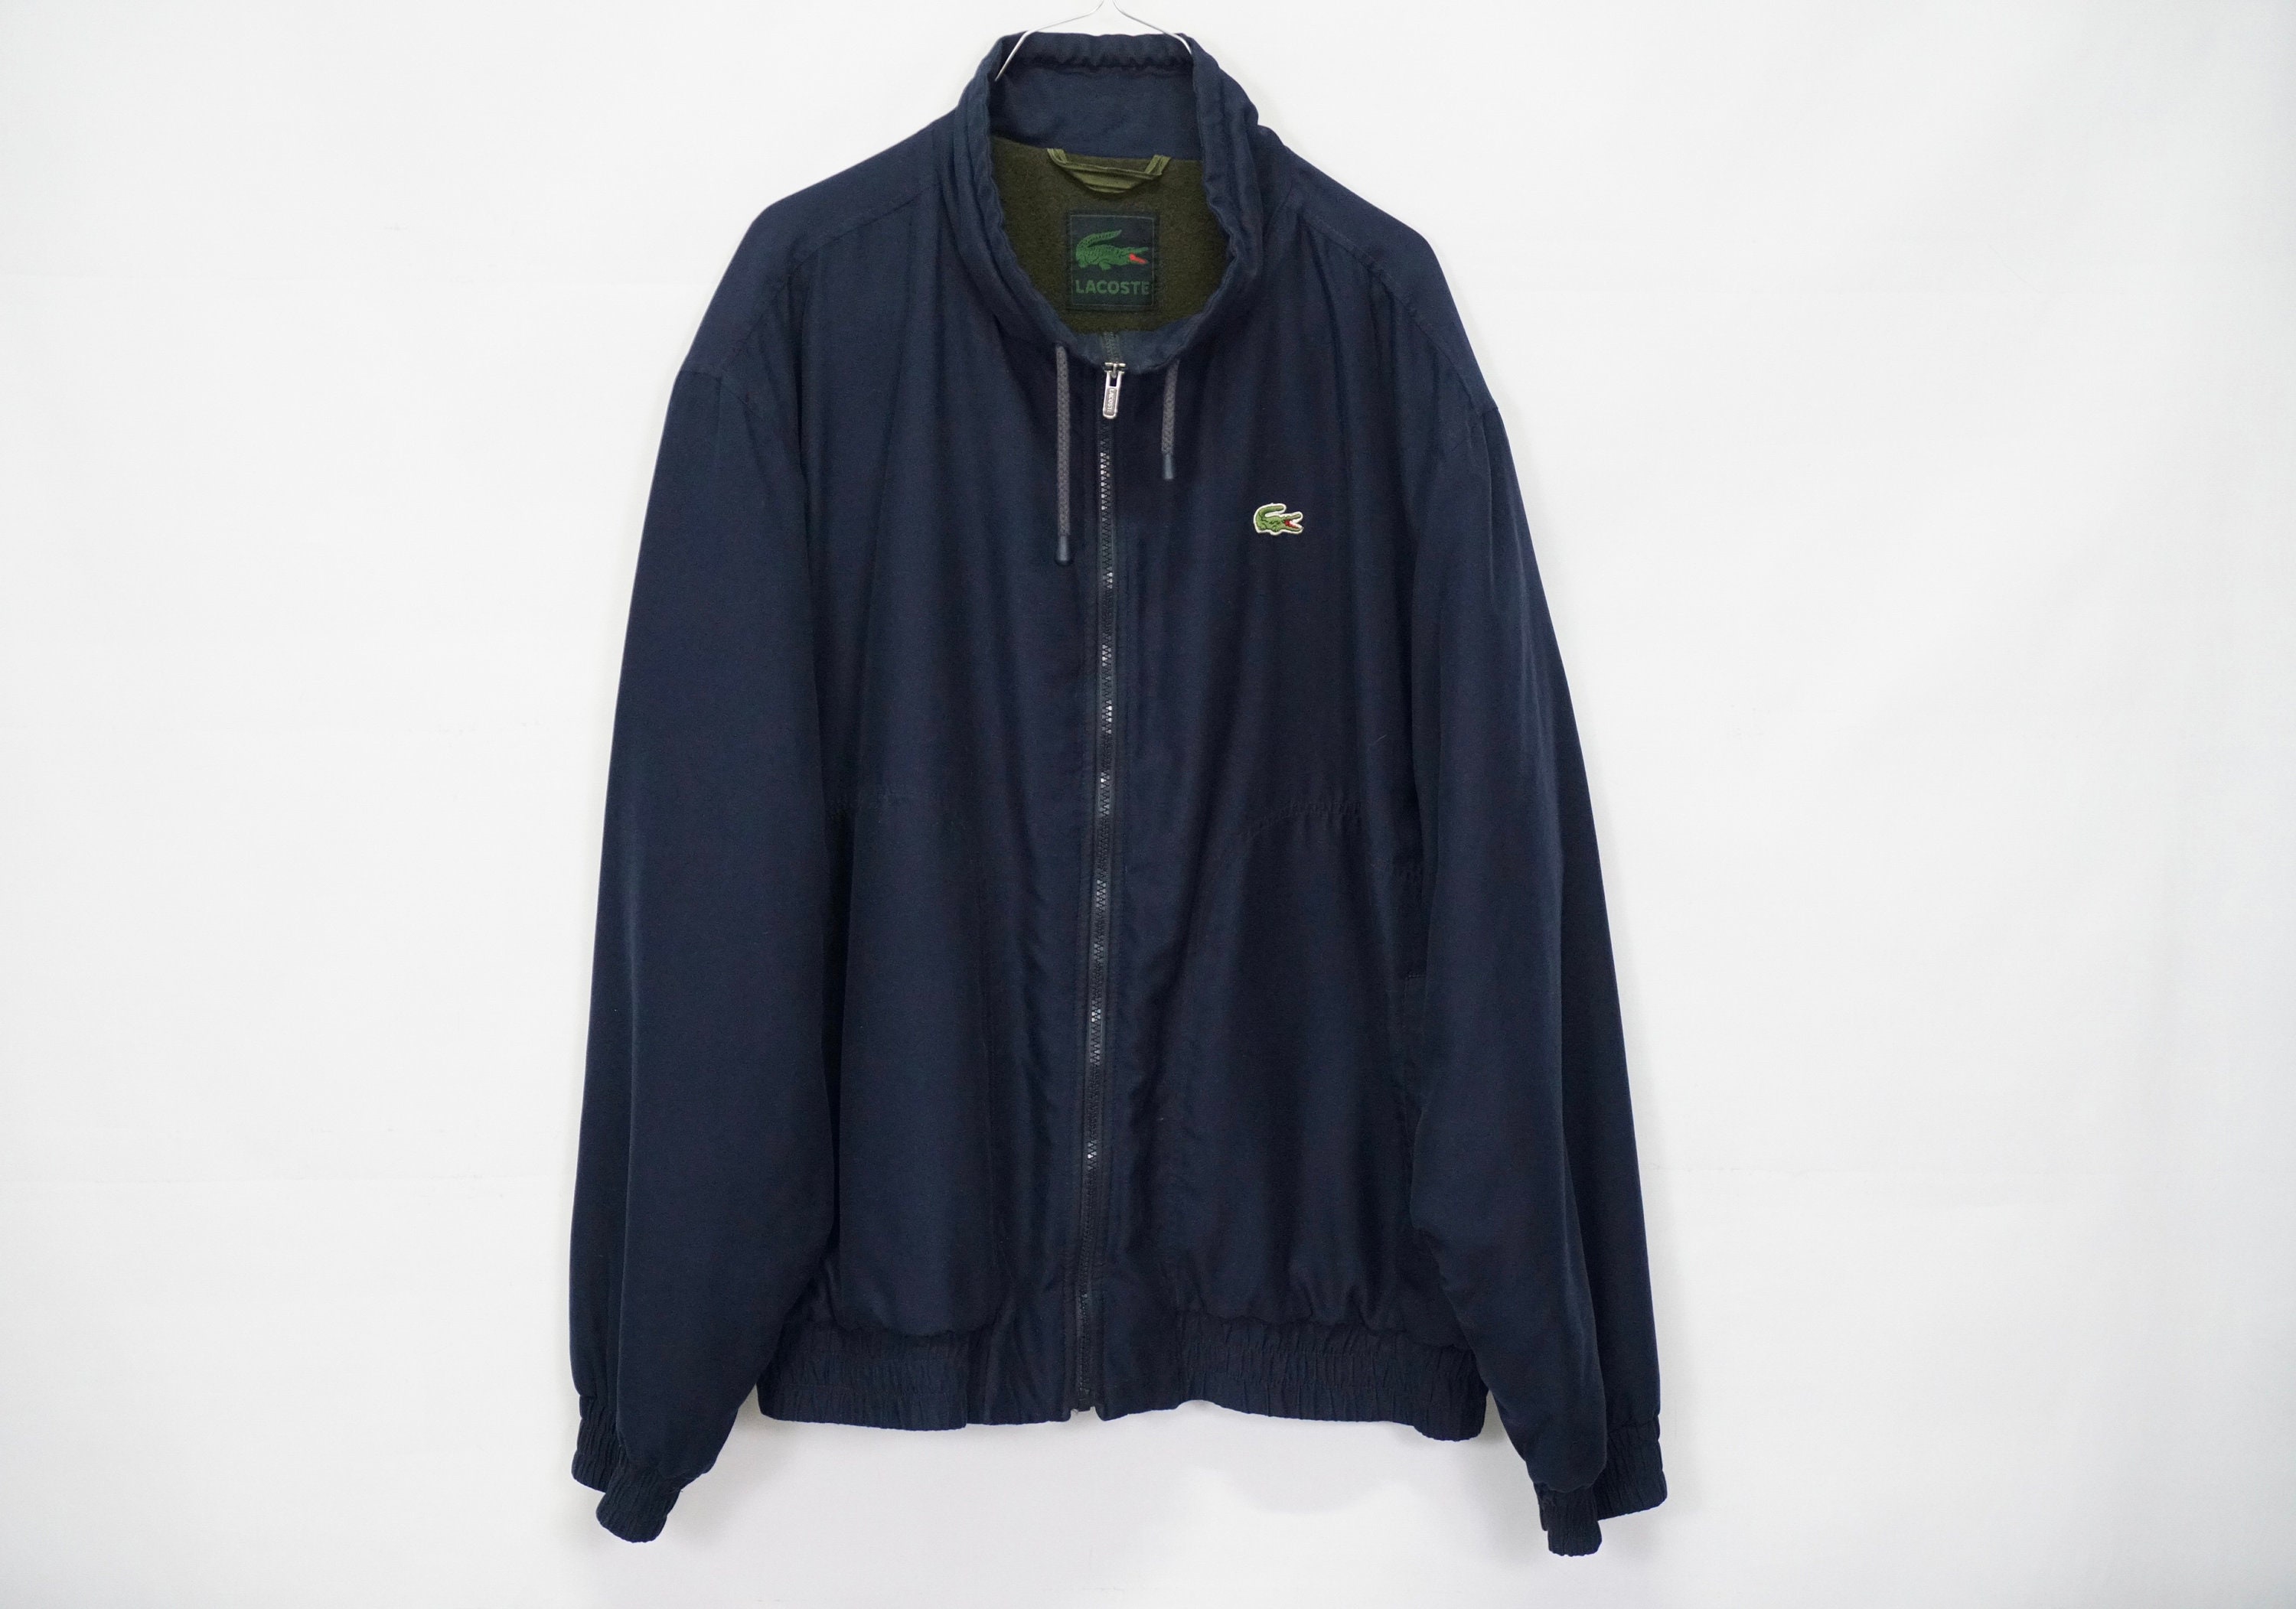 Vintage Lacoste Jacket Size. 2XL Old School 90s -